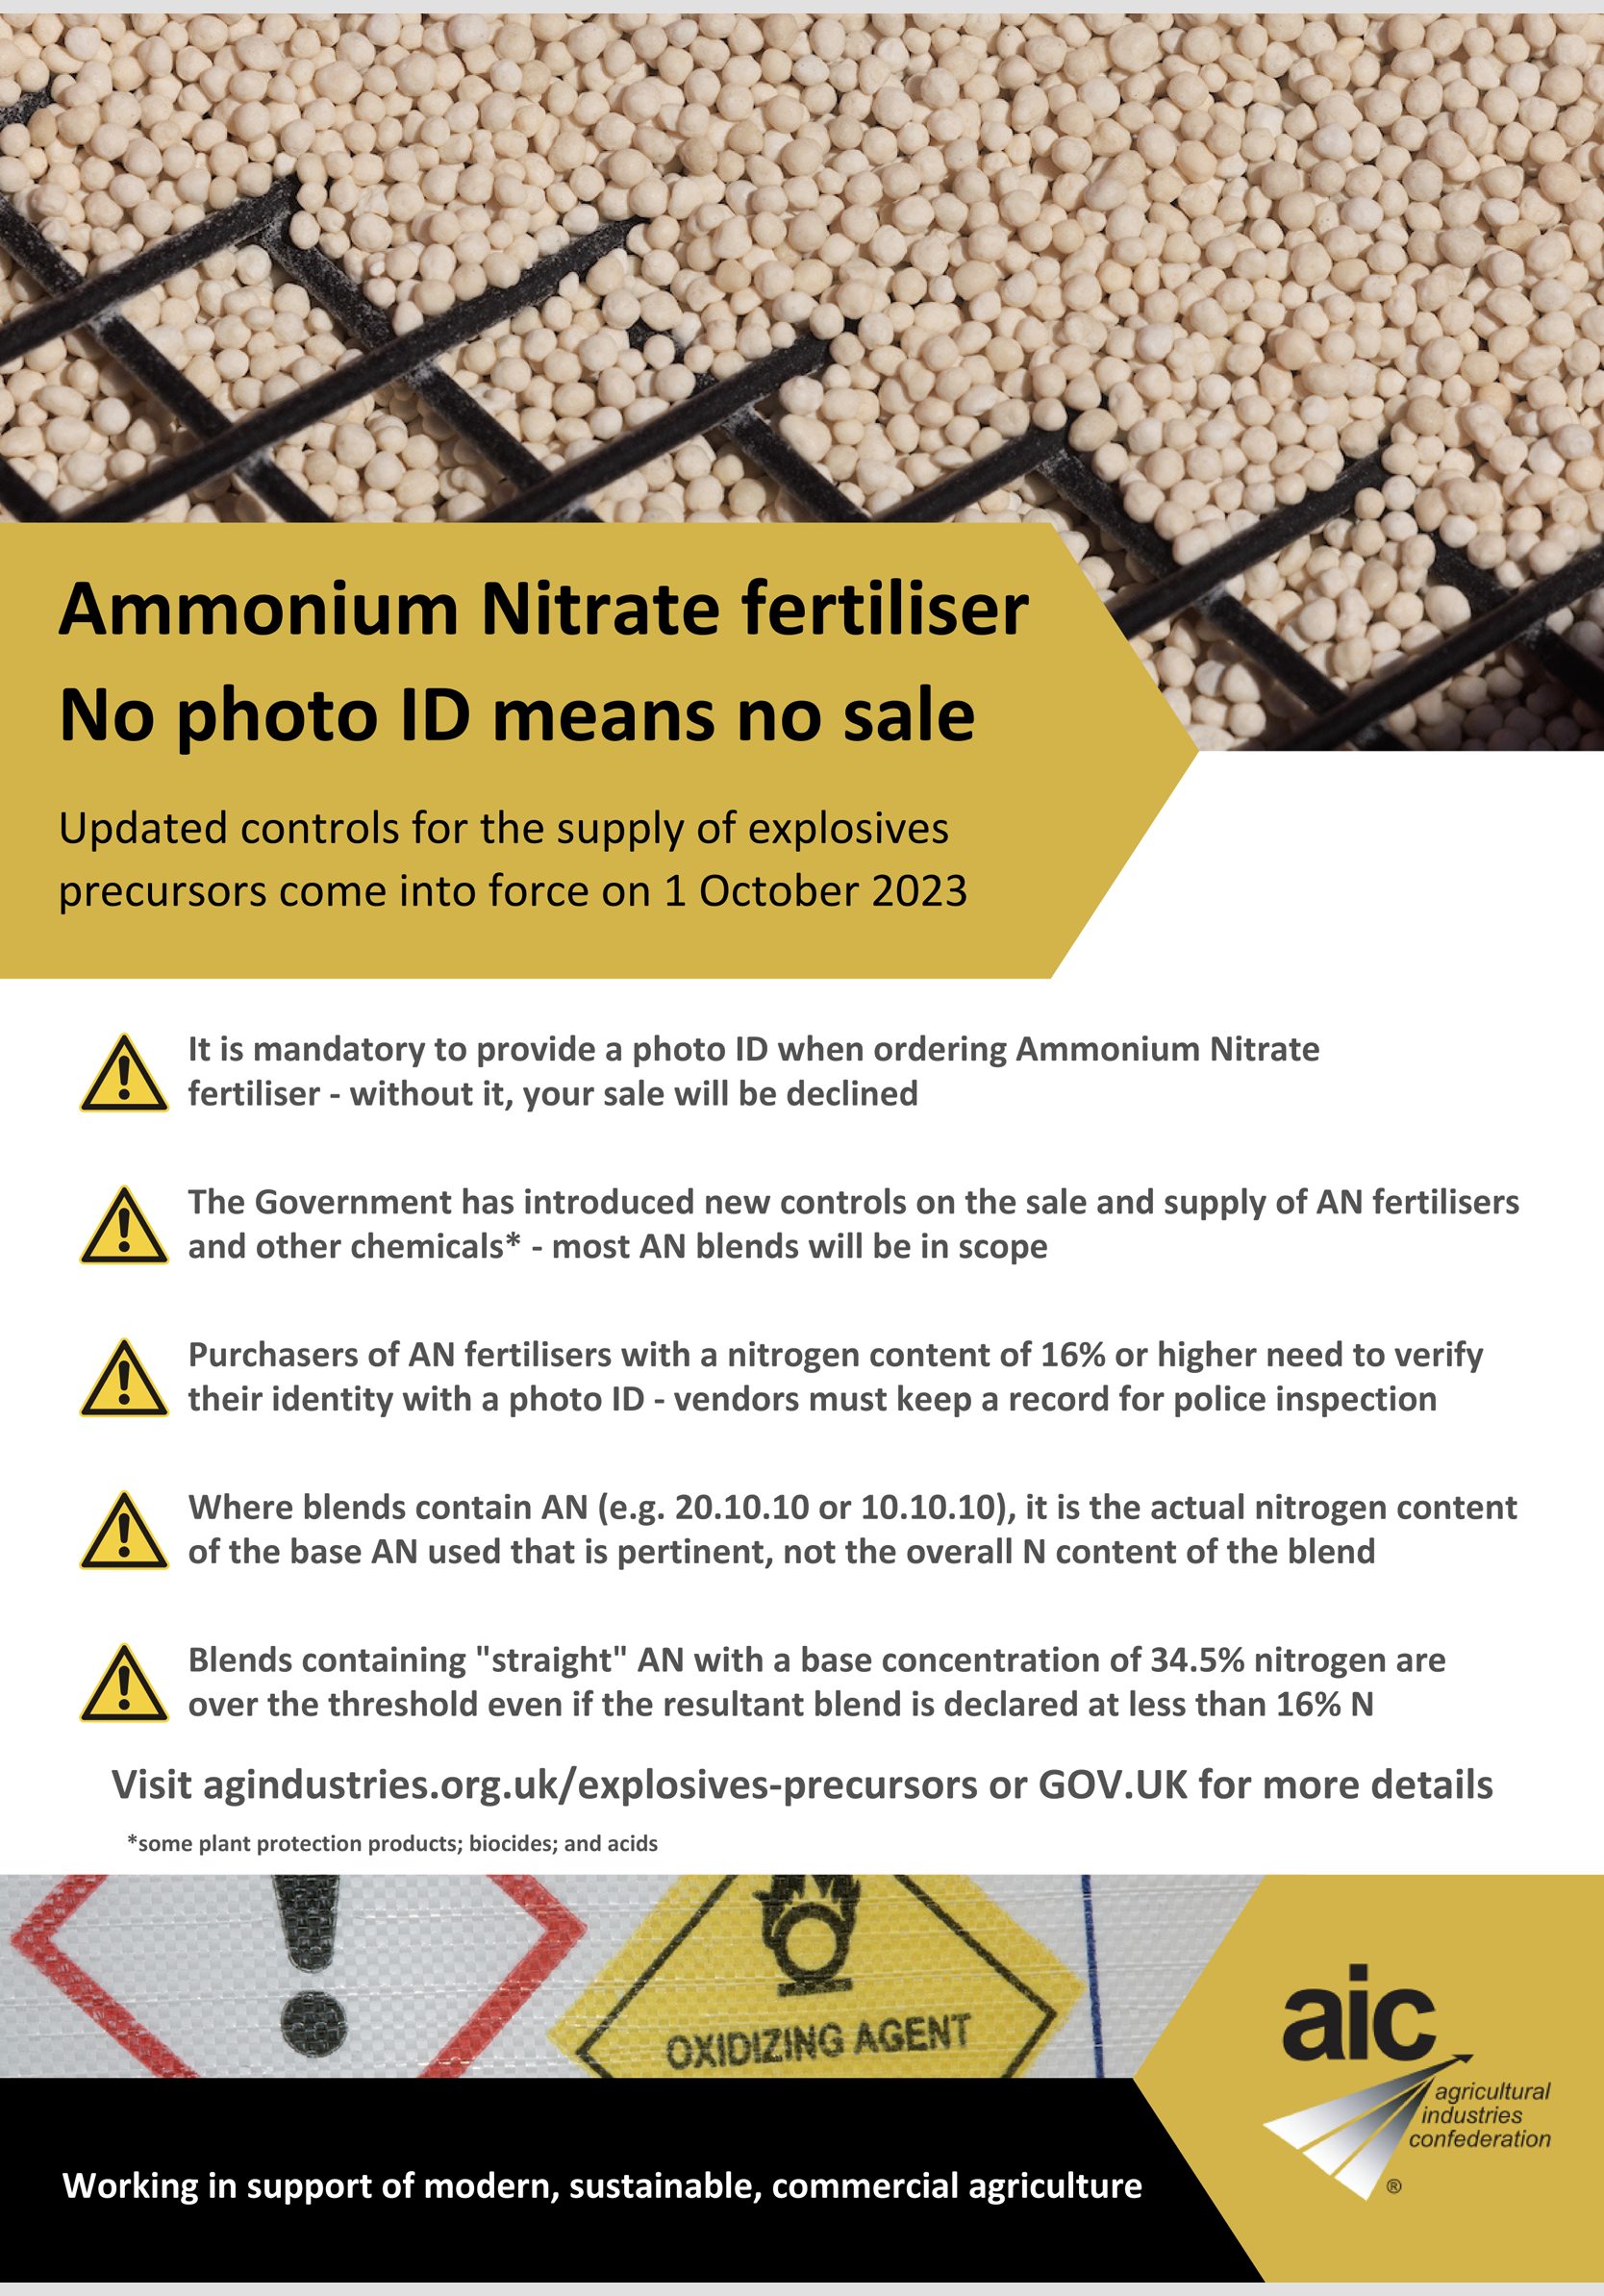 AIC issues guidance on fertiliser photo ID